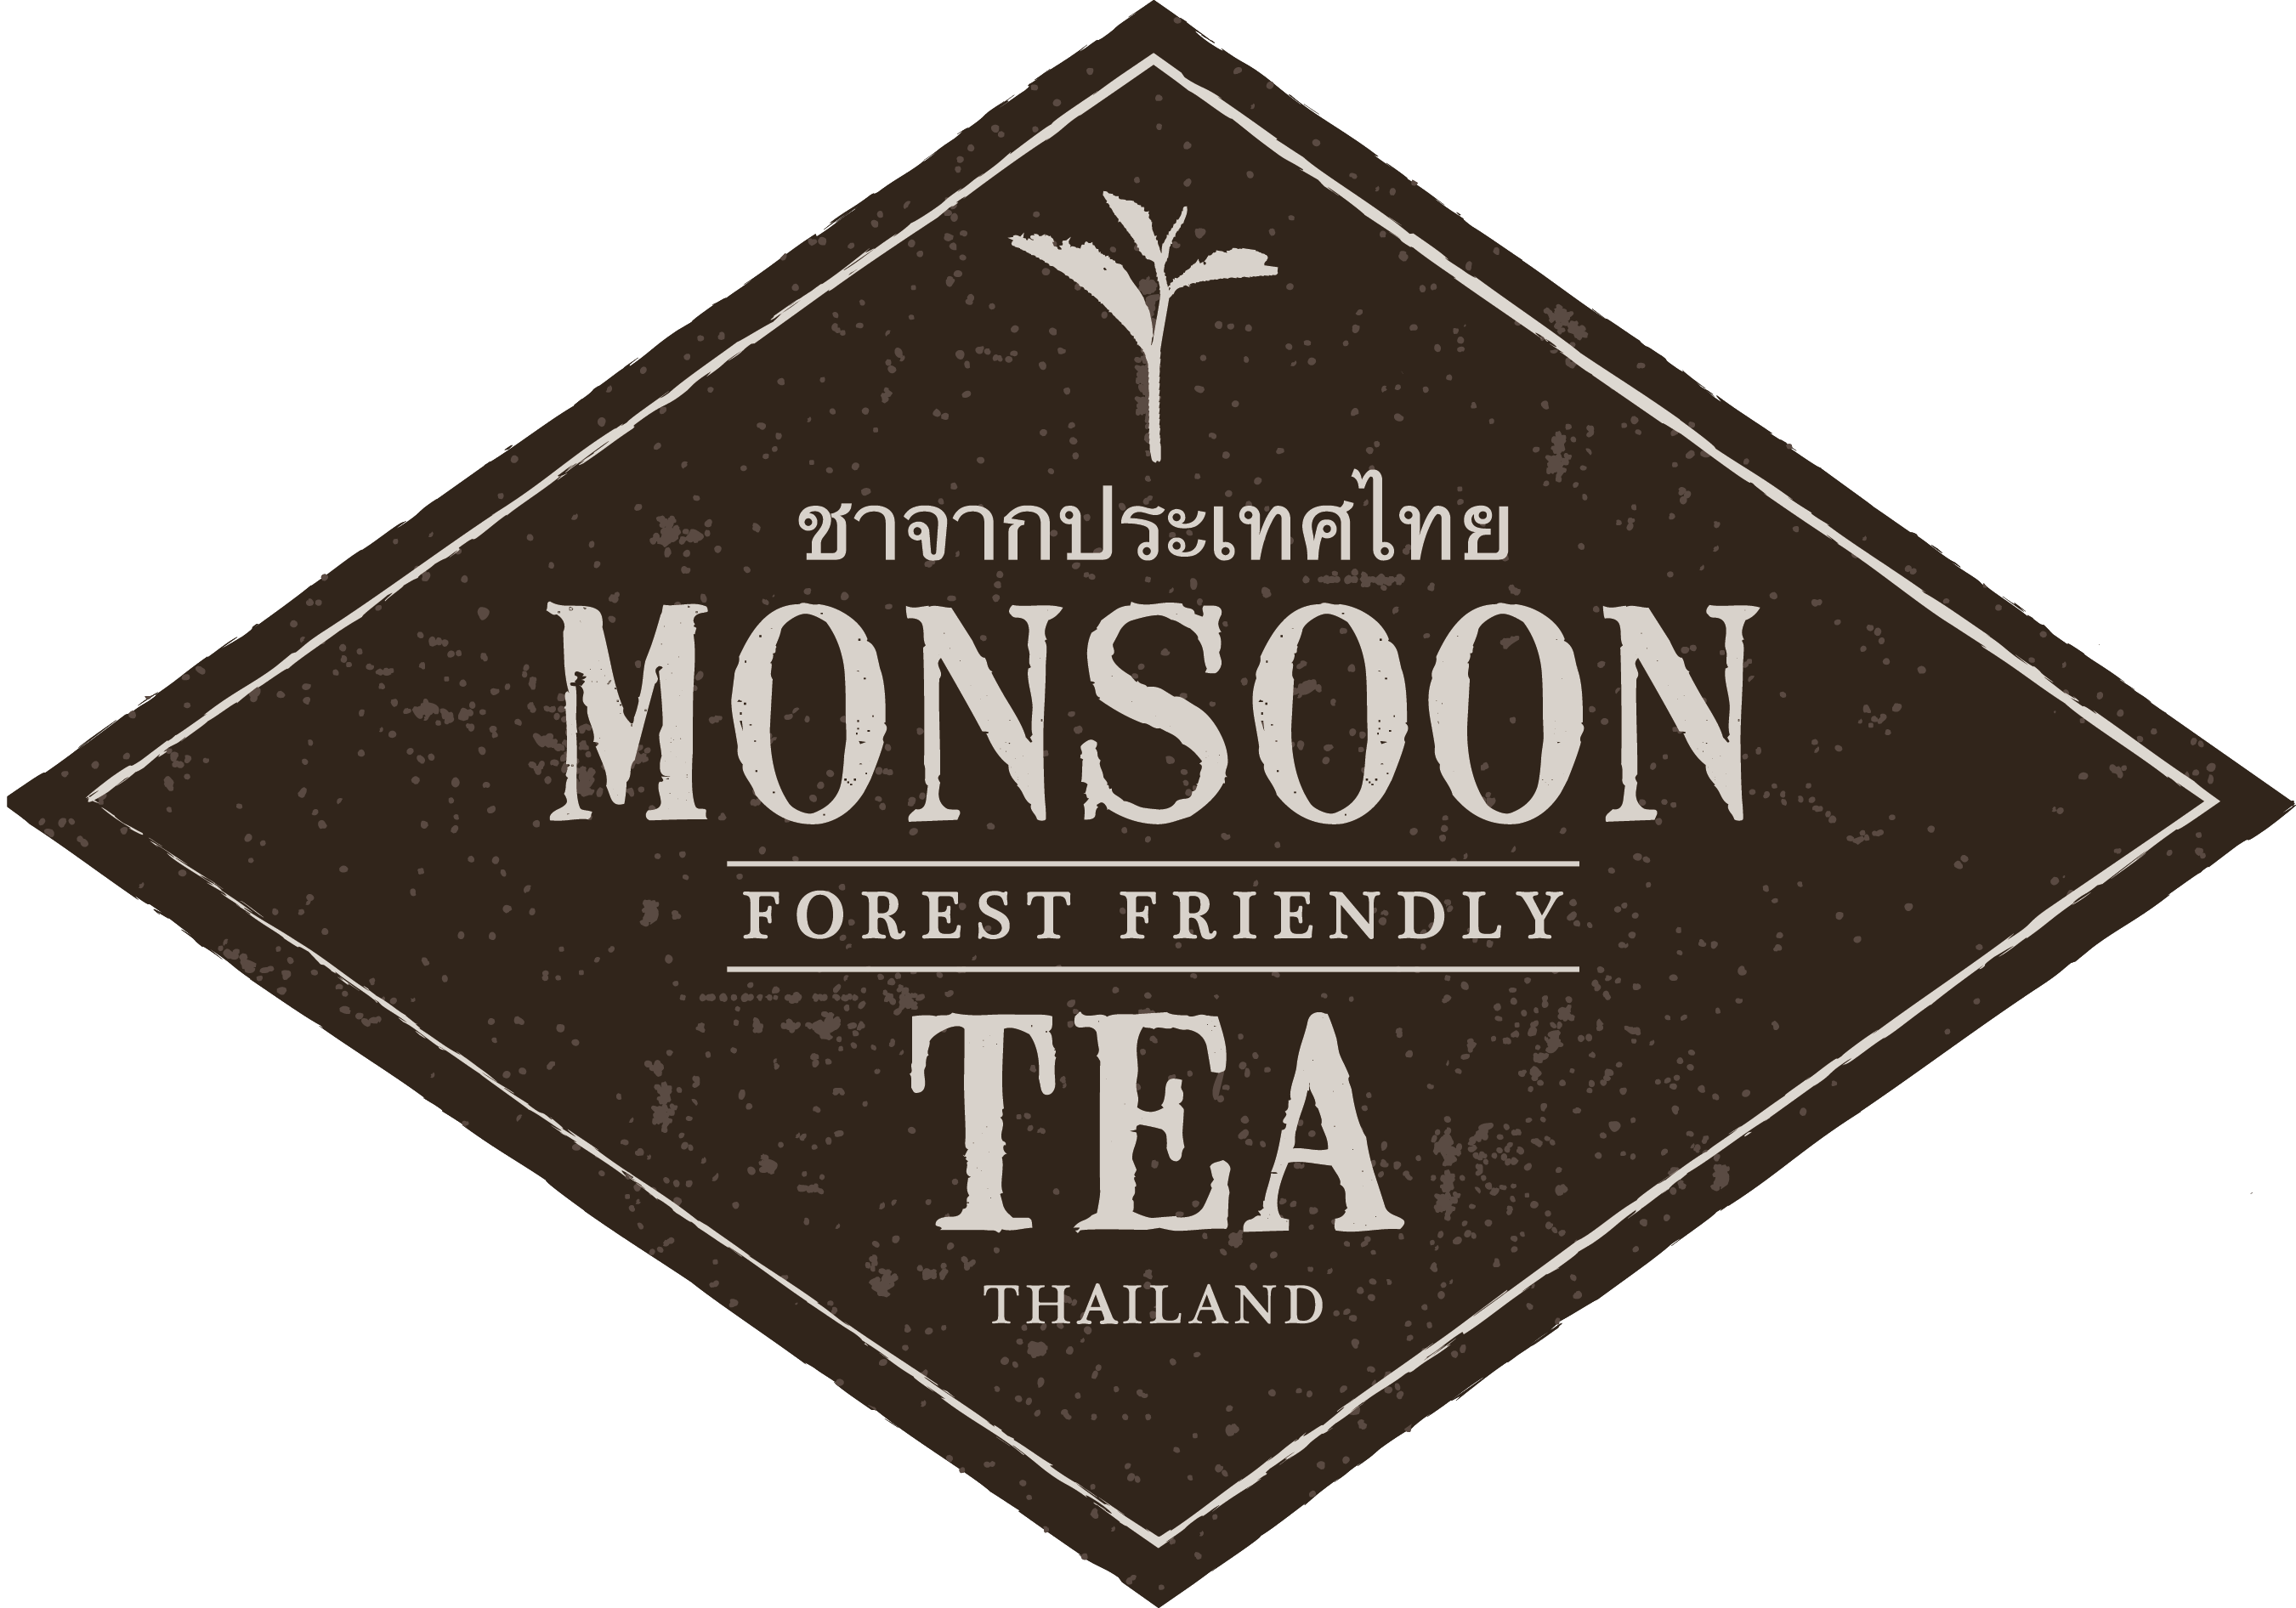 Monteaco's Forest Friendly Tea Chosen by Spain's Largest Tea Retailer –  MONTEACO